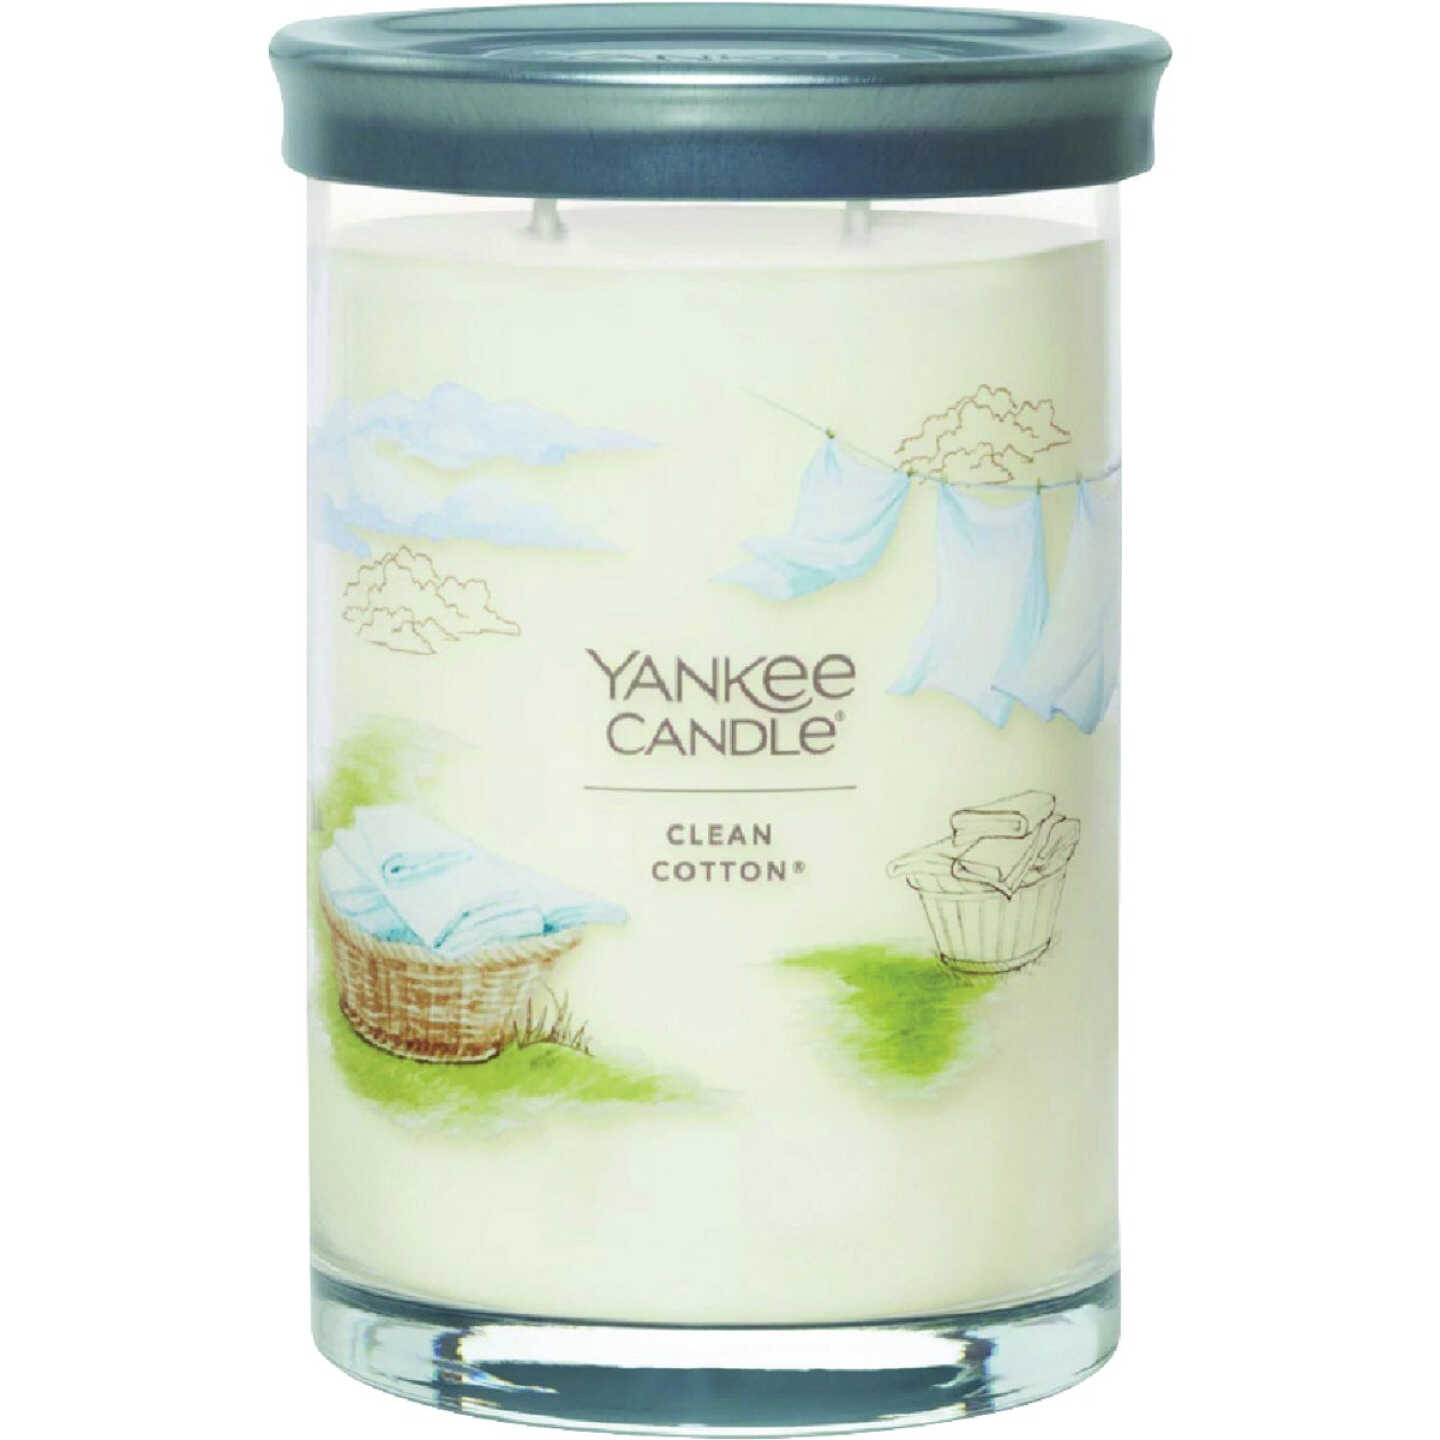 Yankee Candle 13 Oz. Clean Cotton Medium Jar Candle - Foley Hardware